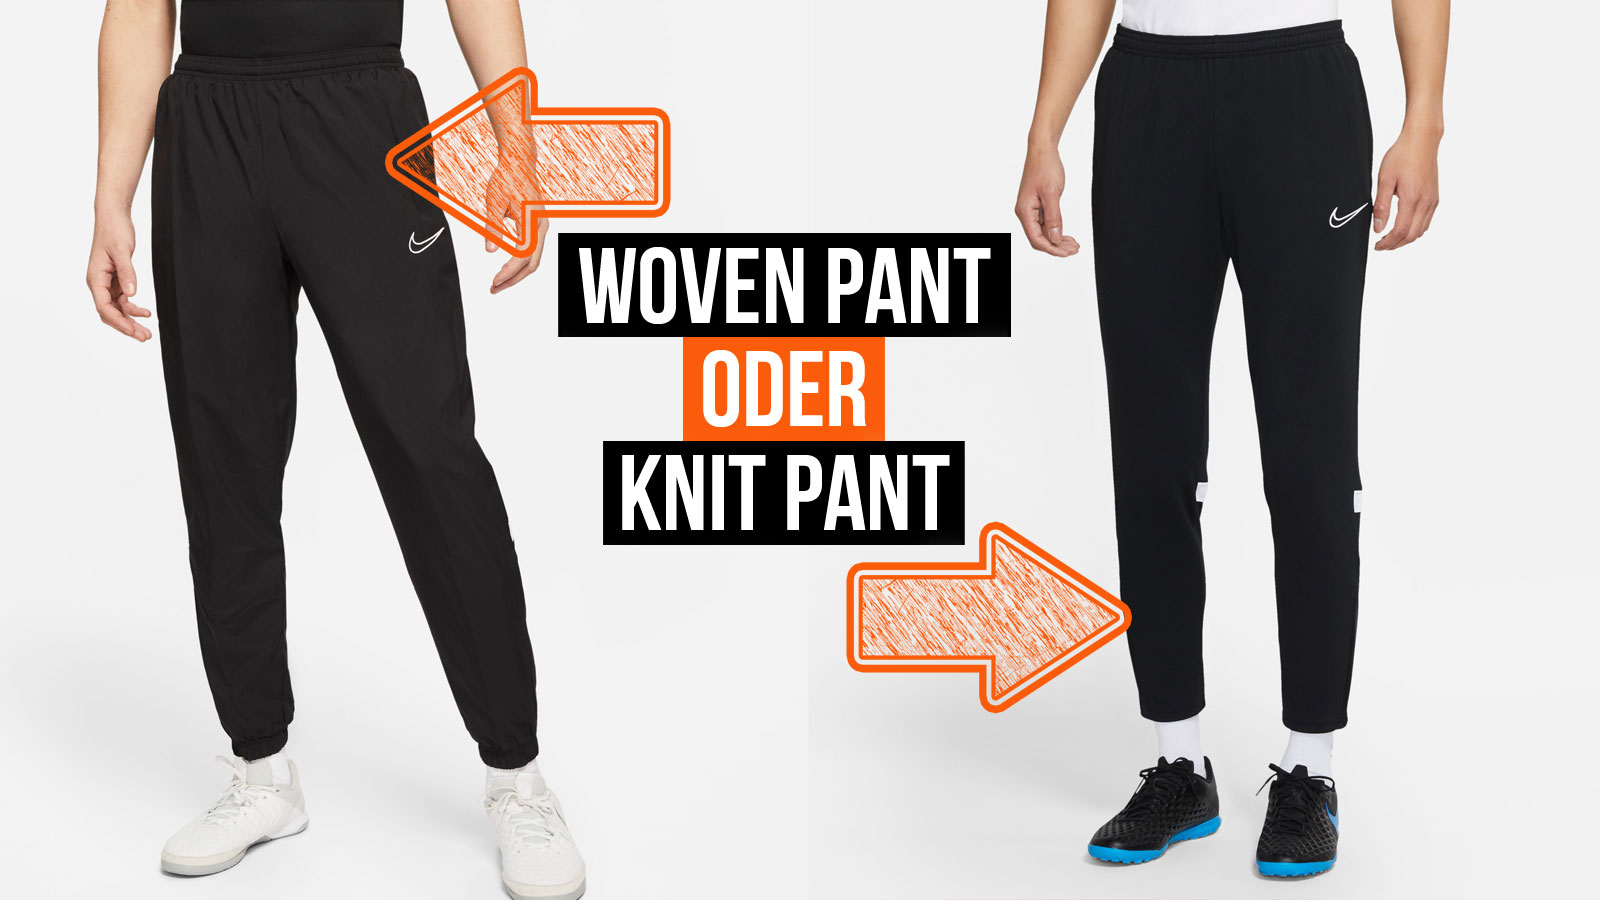 Vergleich der Nike Woven Pant und der Nike Knit Pant Trainingshosen